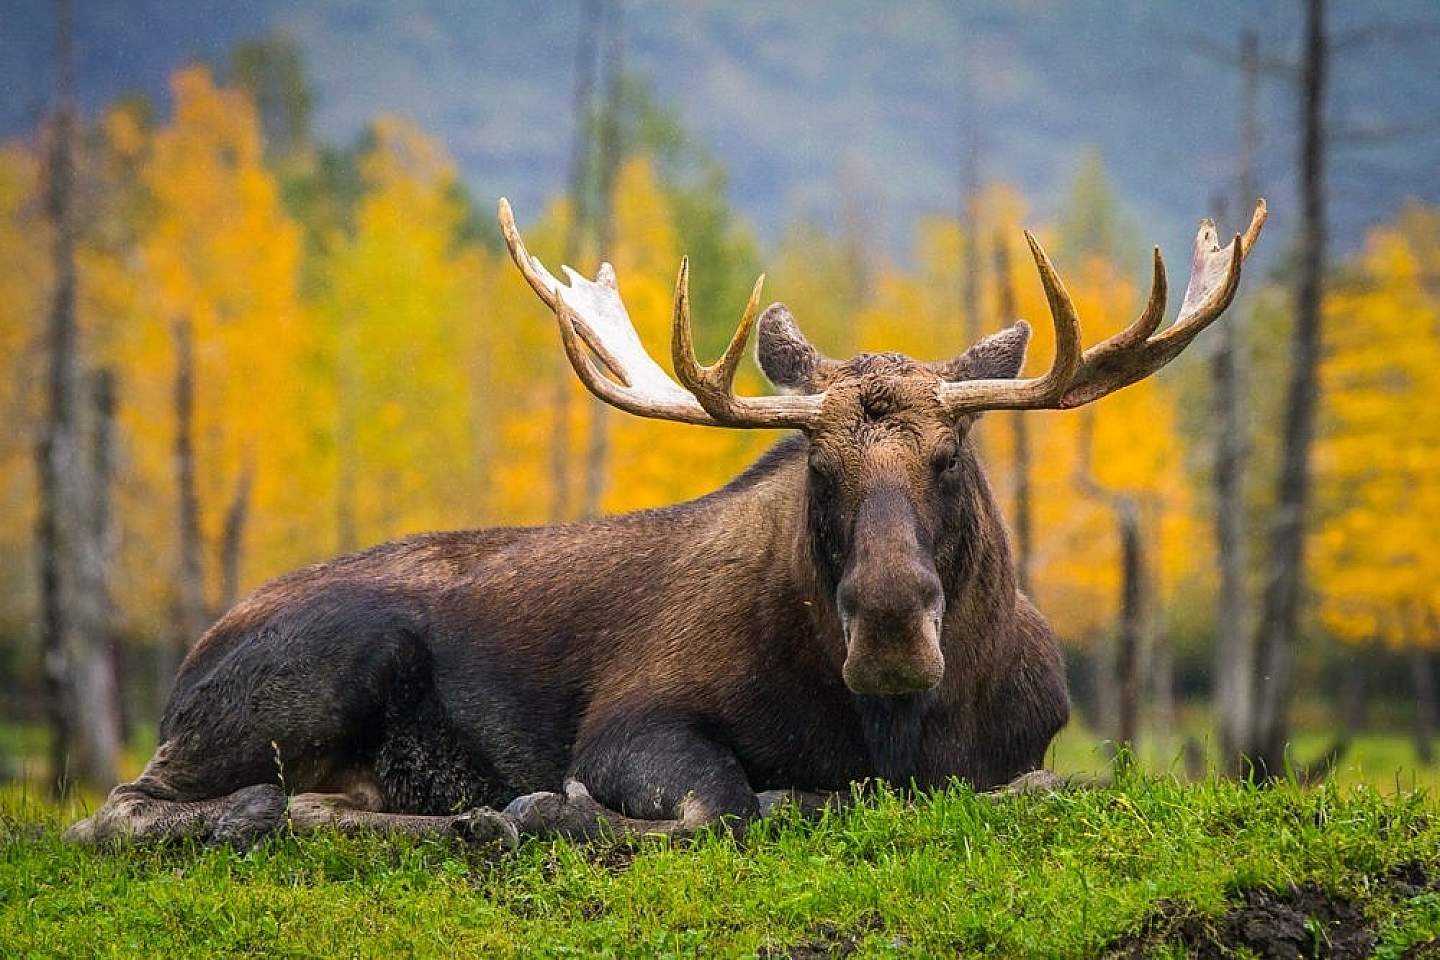 Stop into the Alaska Wildlife Conservation Center